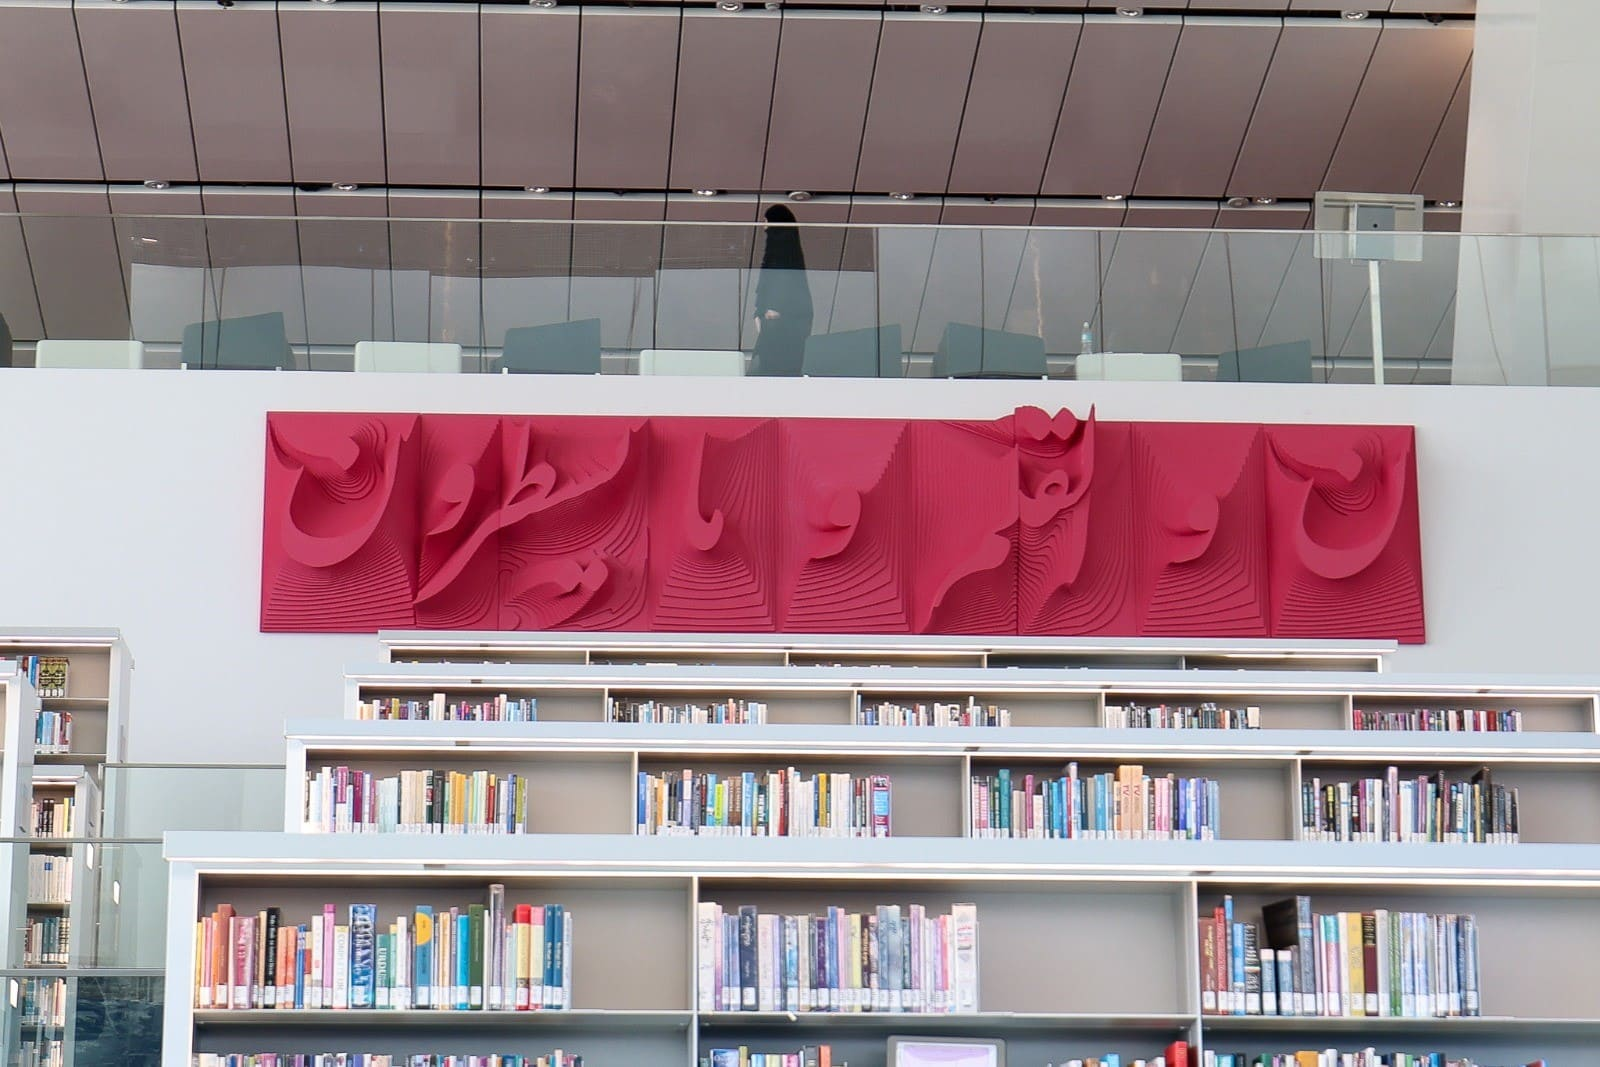 Calligraphy Artwork in Qatar National Library Embodying Islamic Heritage